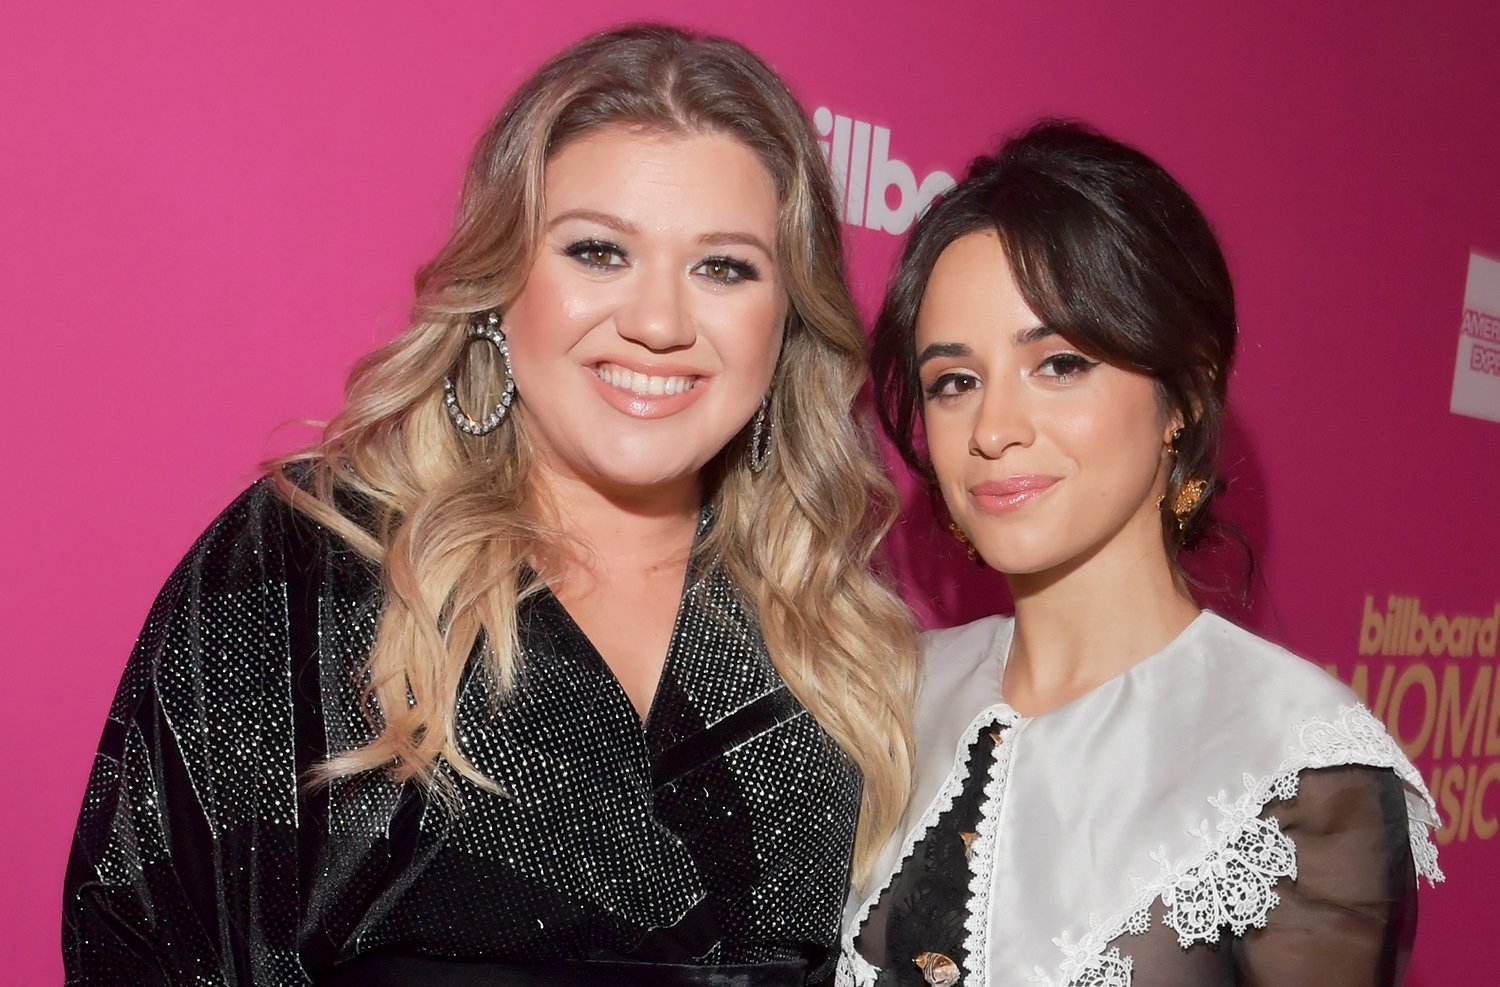 ‘The Voice’ Season 22: Camila Cabello Joins as a Coach, Many Fans Demand Kelly Clarkson Instead